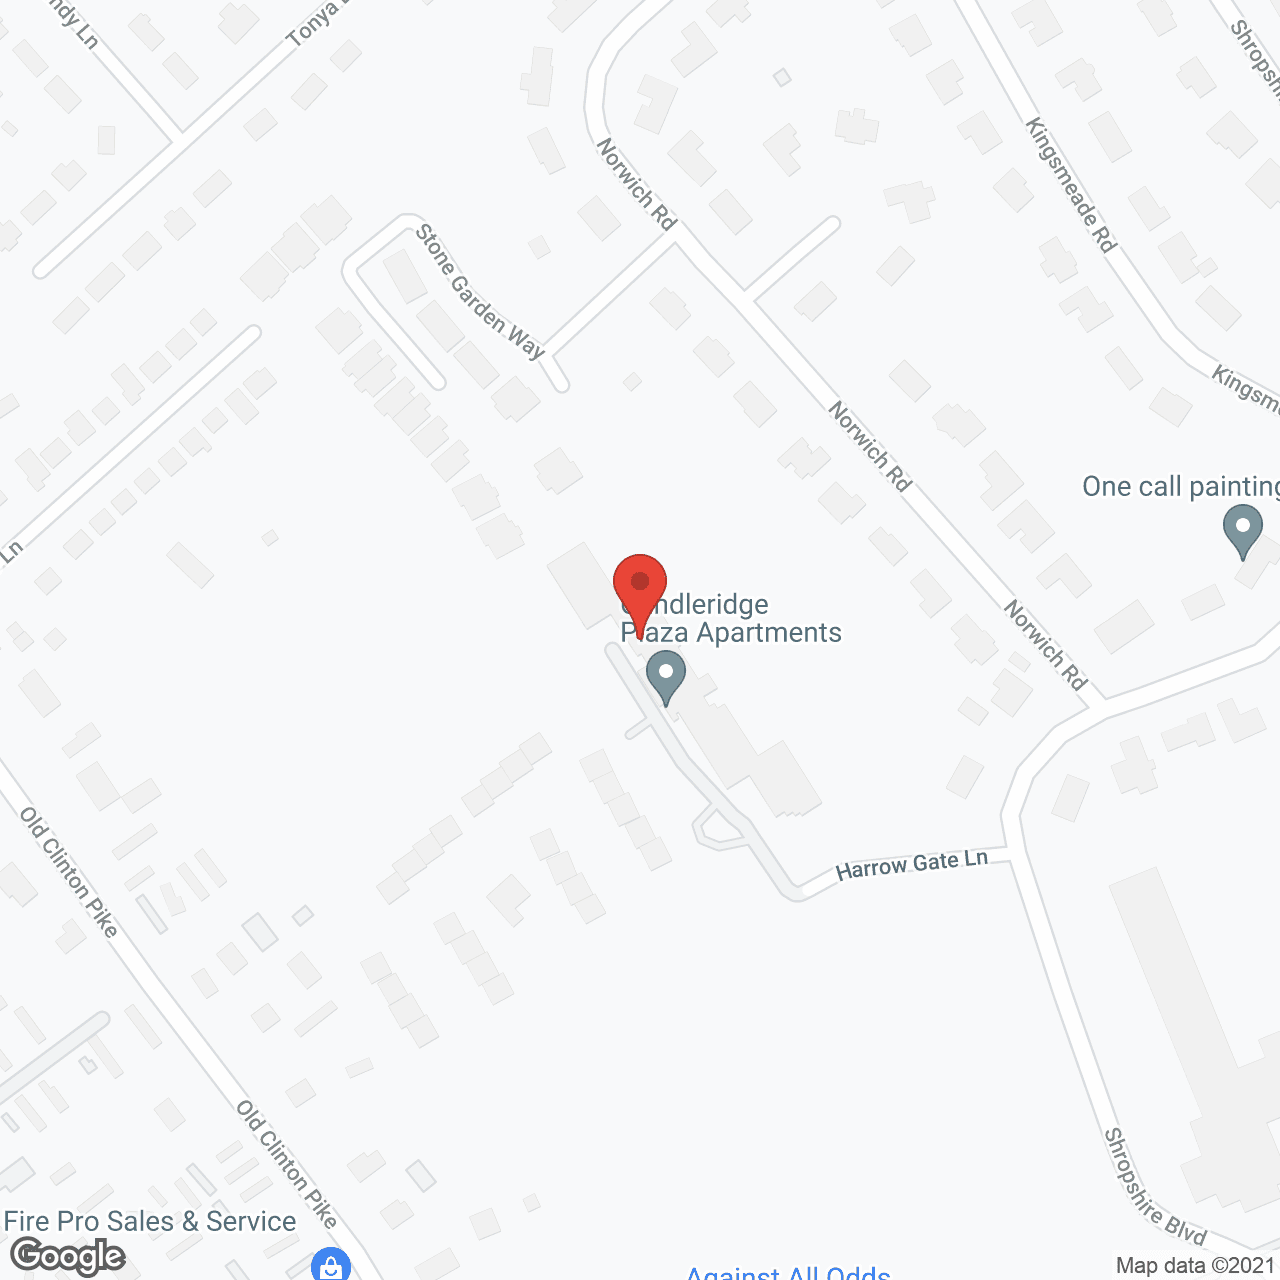 Candleridge Plaza Apartments in google map